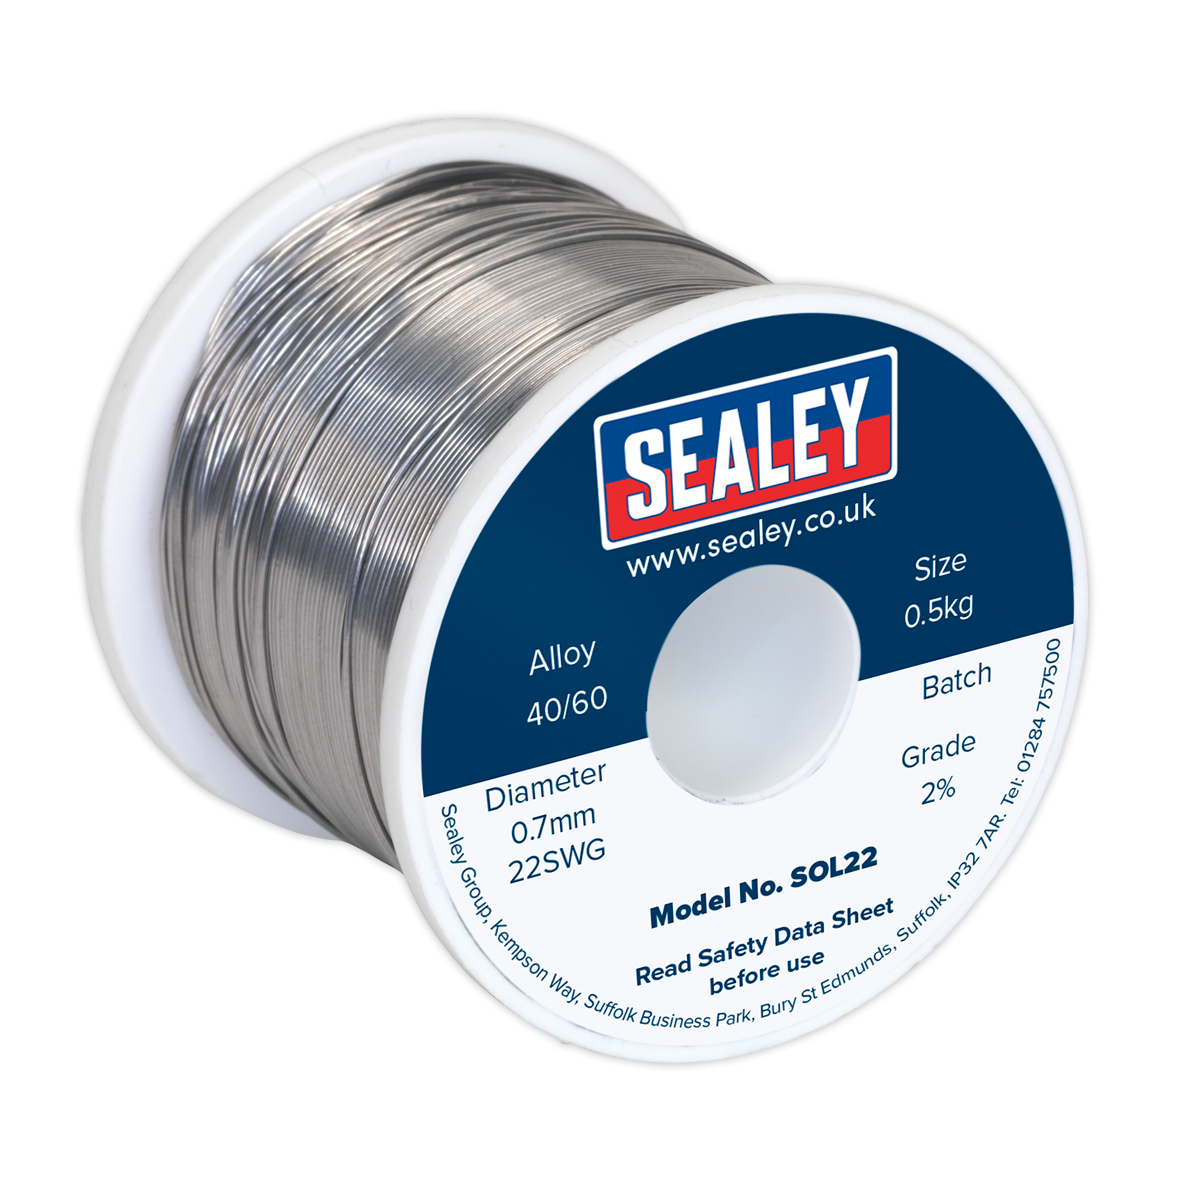 Sealey Solder Wire Quick Flow 2% 0.7mm/22SWG 40/60.5kg Reel